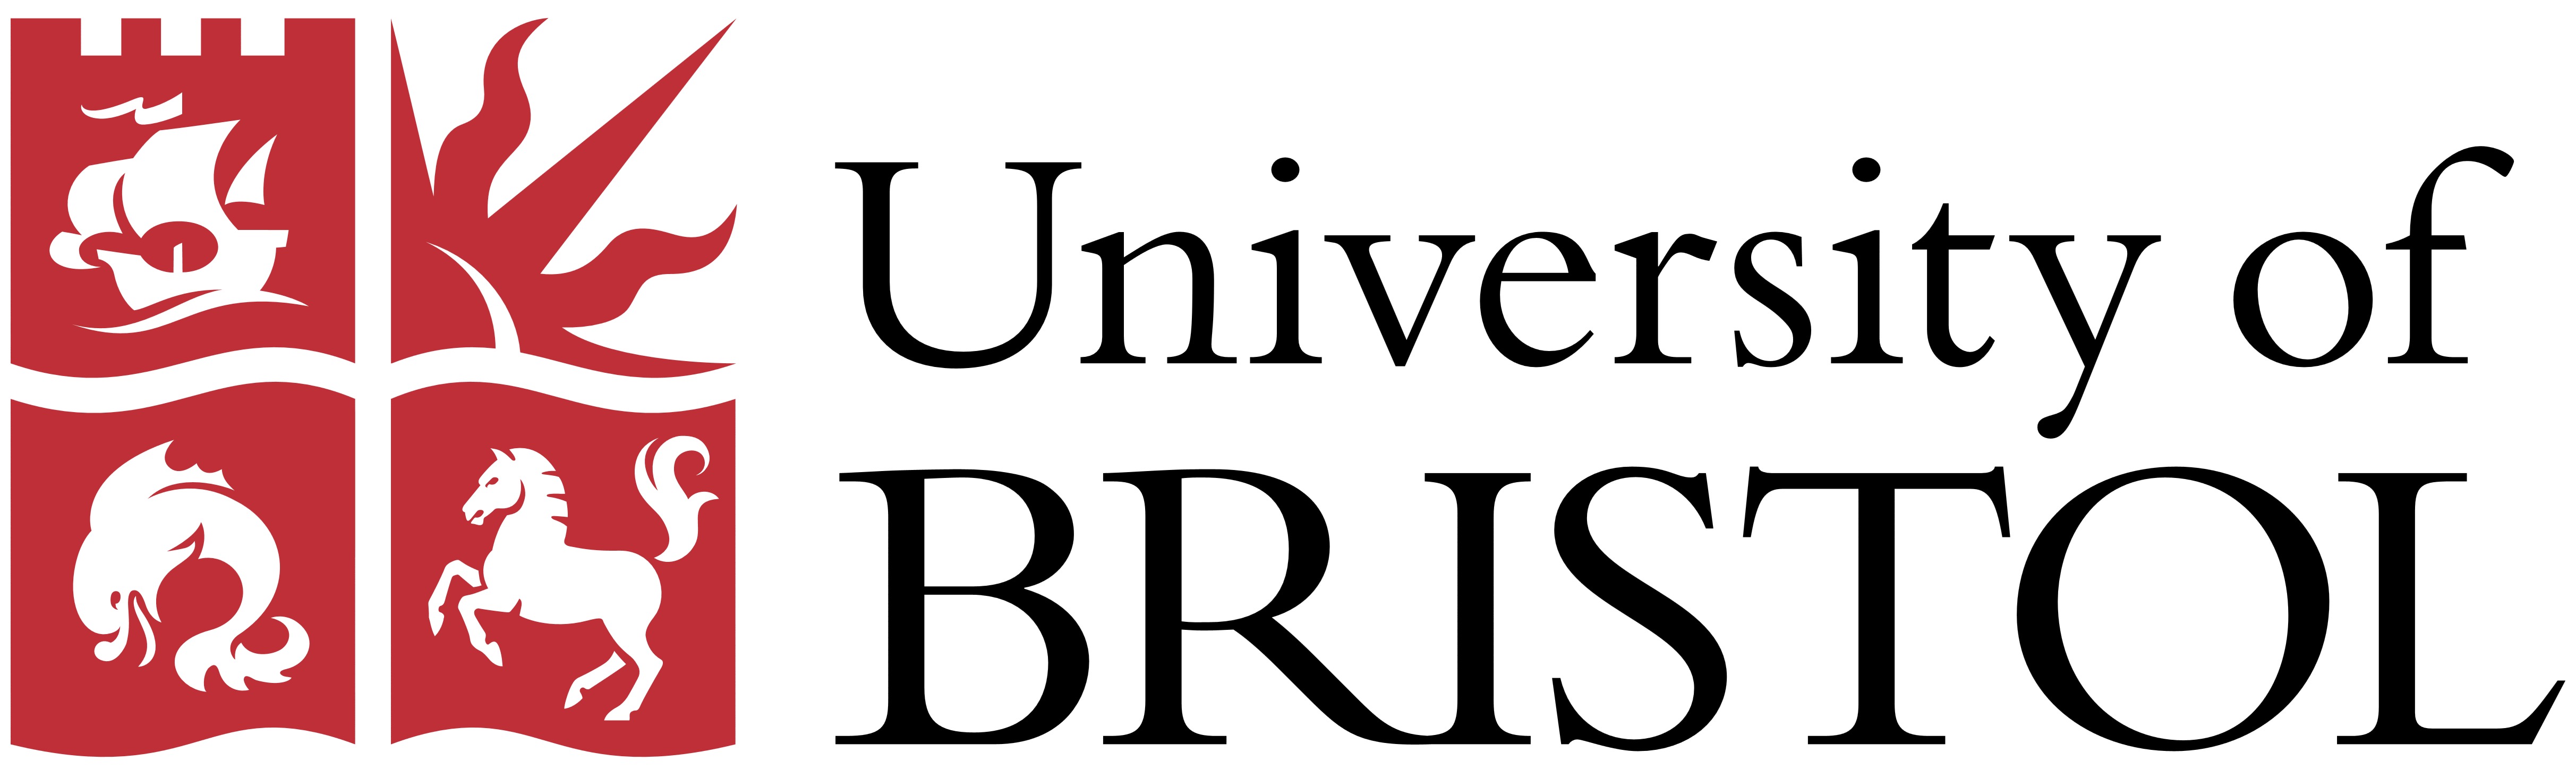 study in University of Bristol